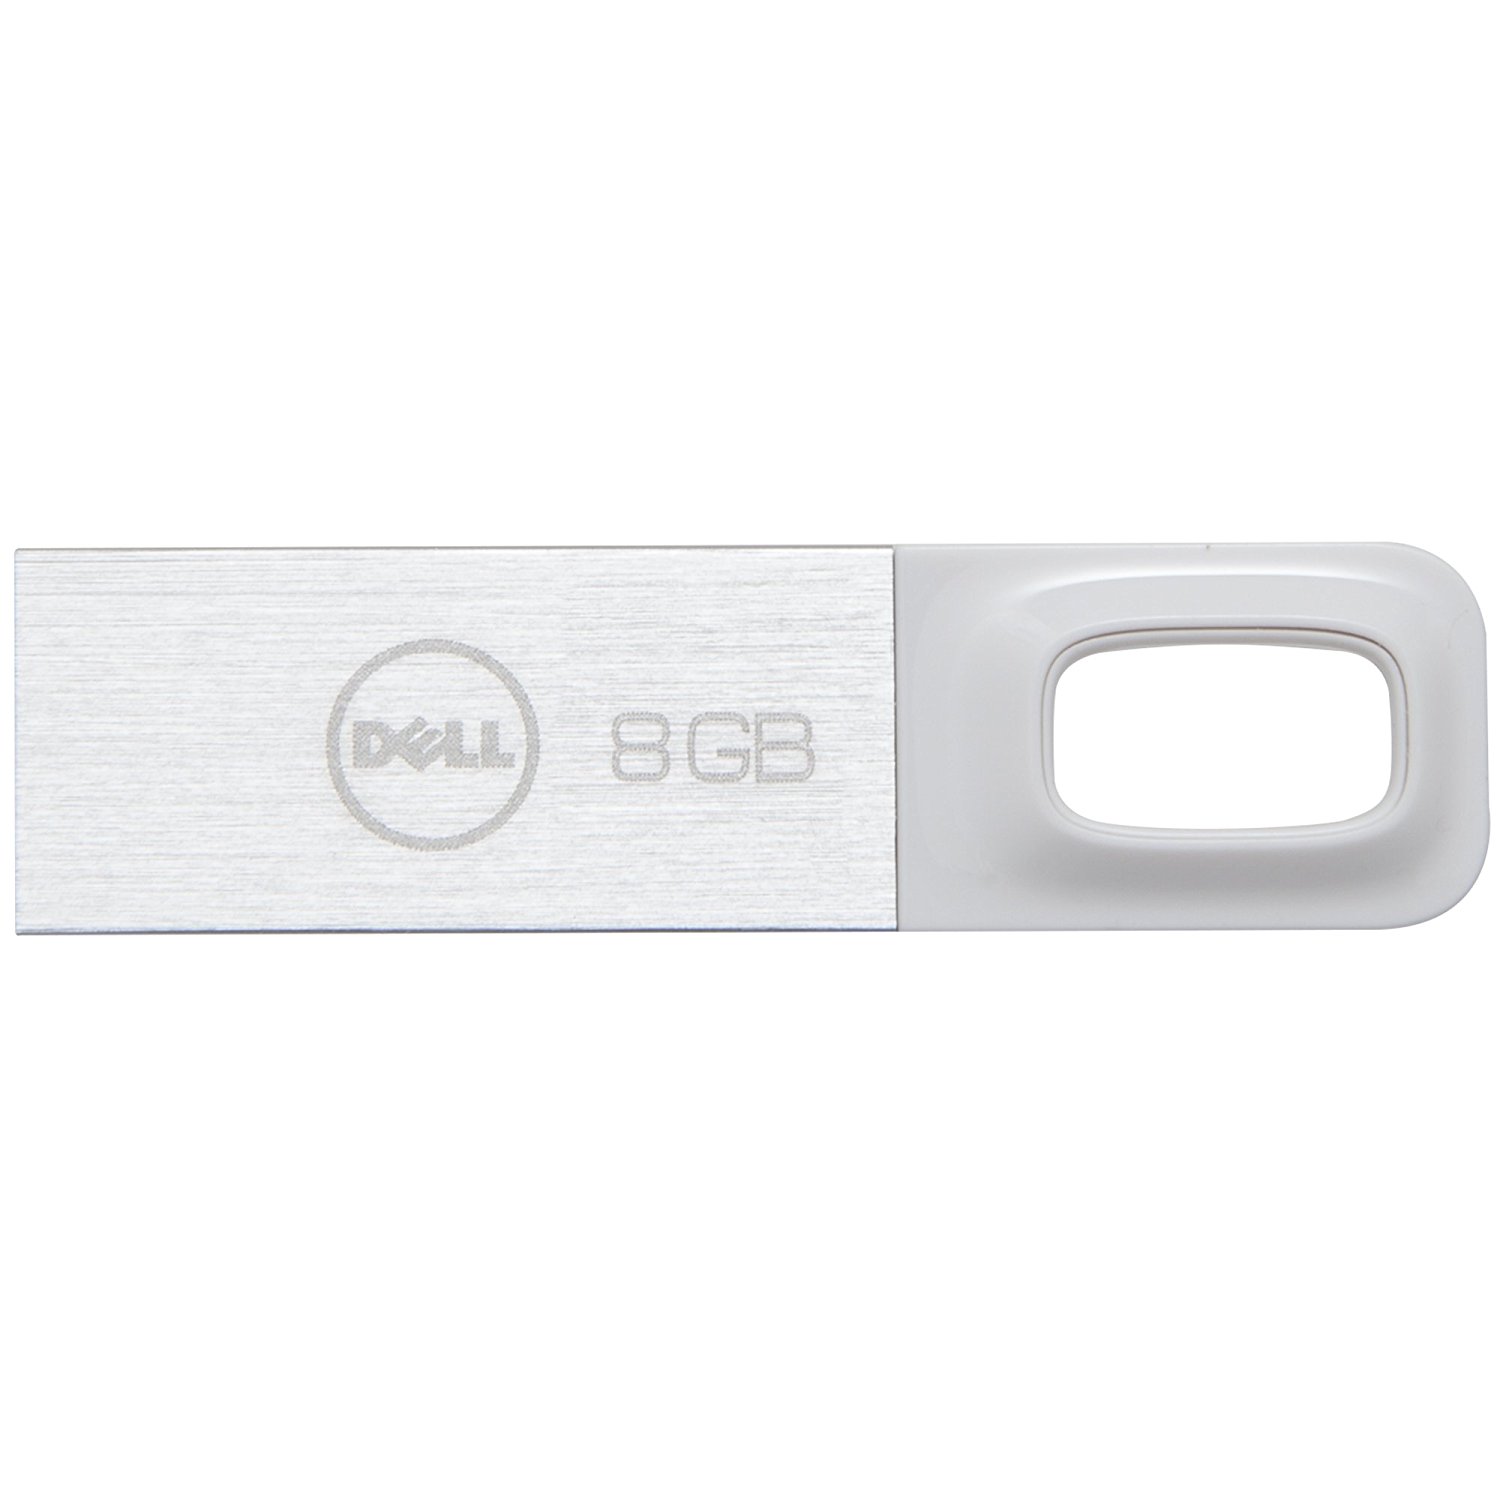 Dell USB Memory Key - USB flash drive - 8 GB - USB 2.0 - image 1 of 2